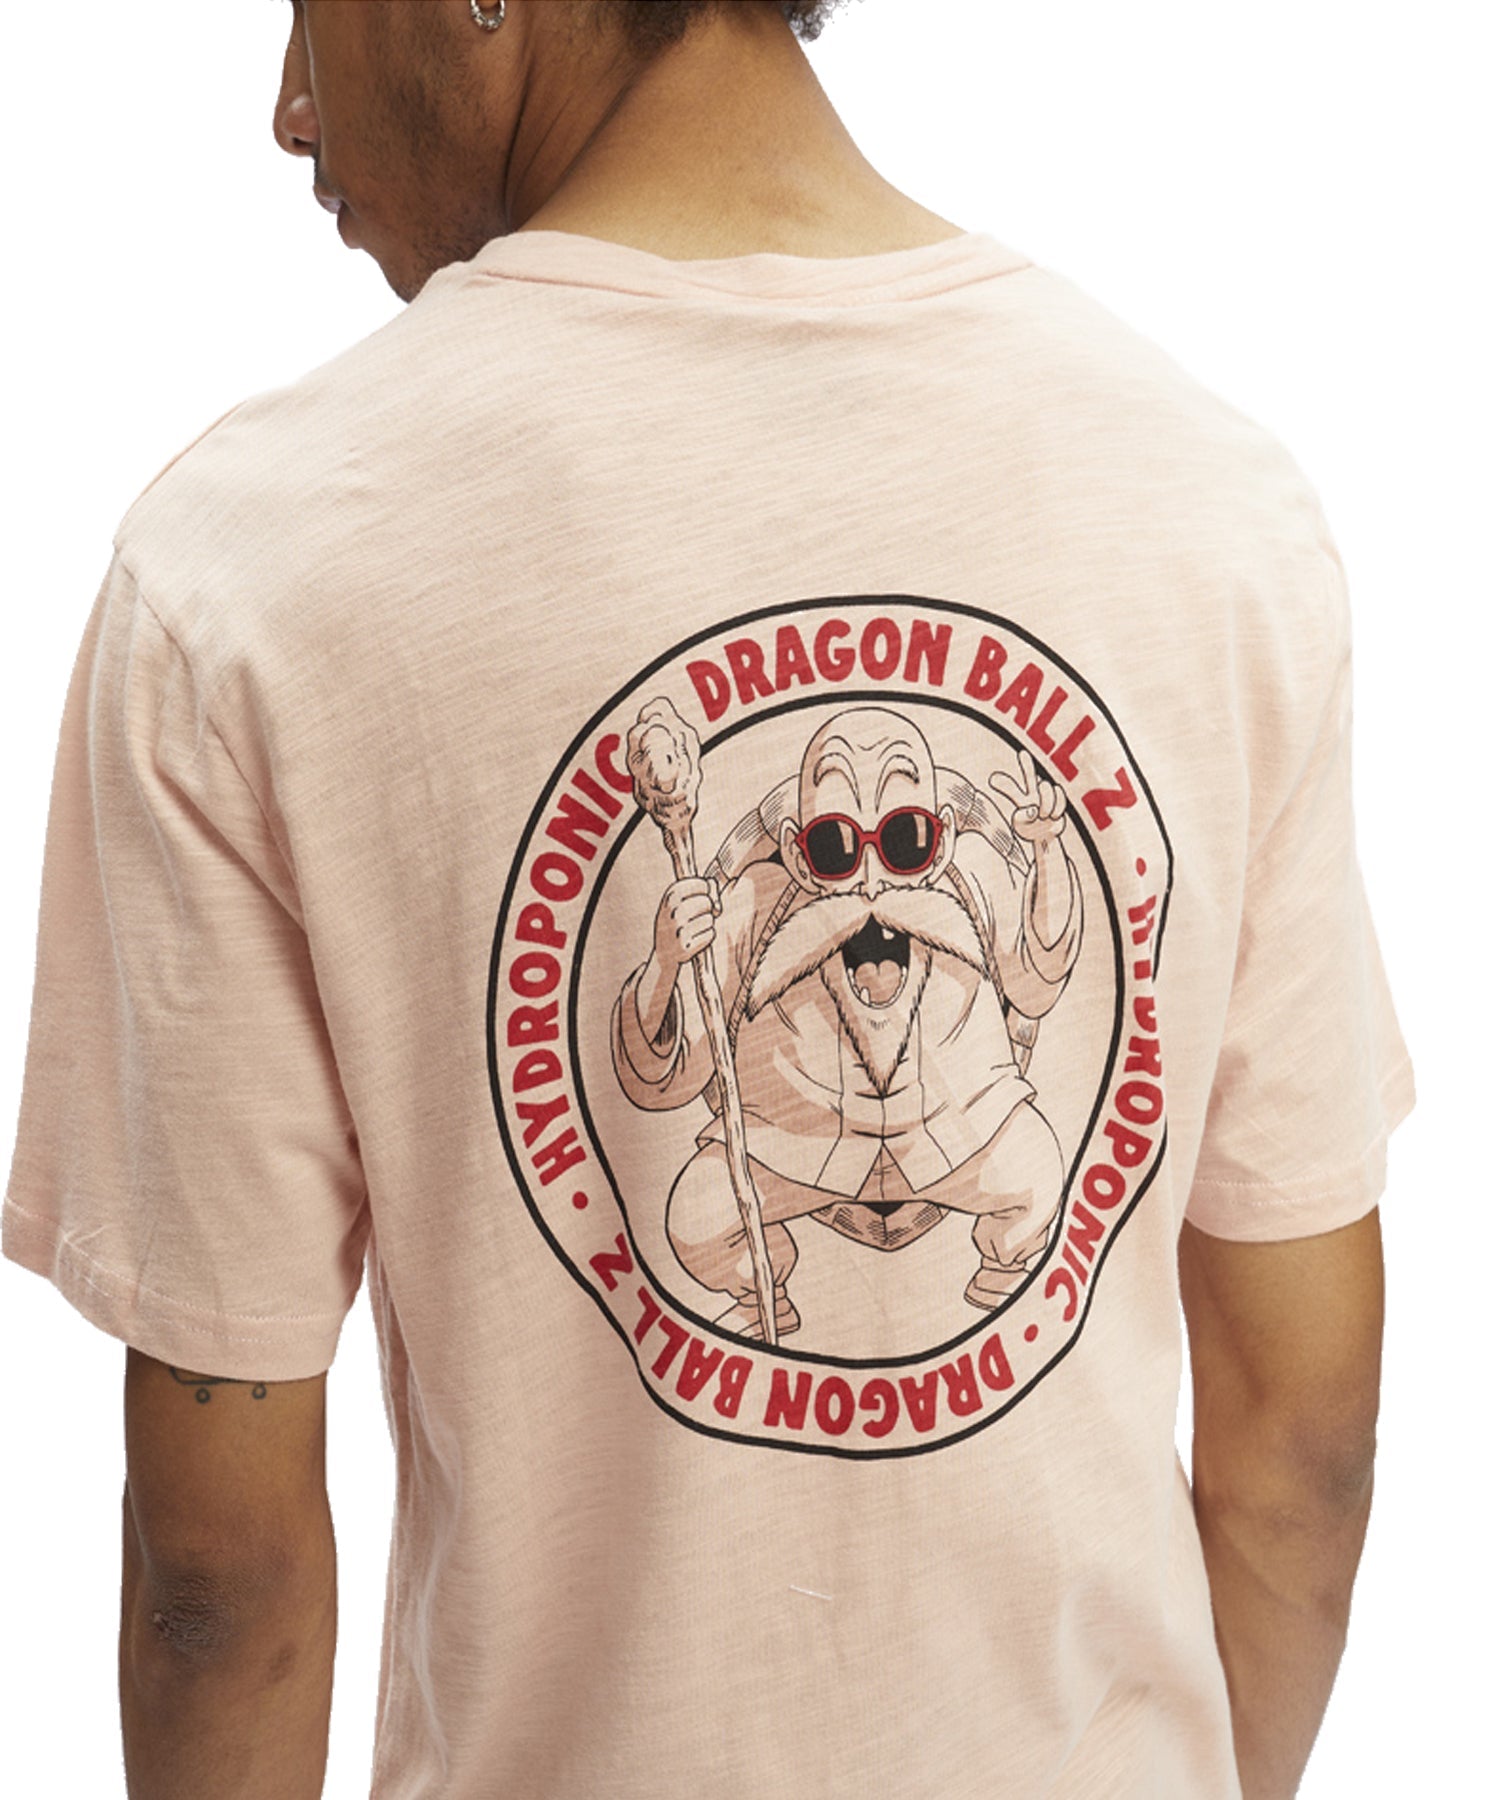 hydroponic-camiseta-dragon-ball-z-kame-sennin-color-rose-de manga corta de la colaboración exclusiva entre Dragon Ball Z-e-Hydroponic-100% Algodón-130gr.